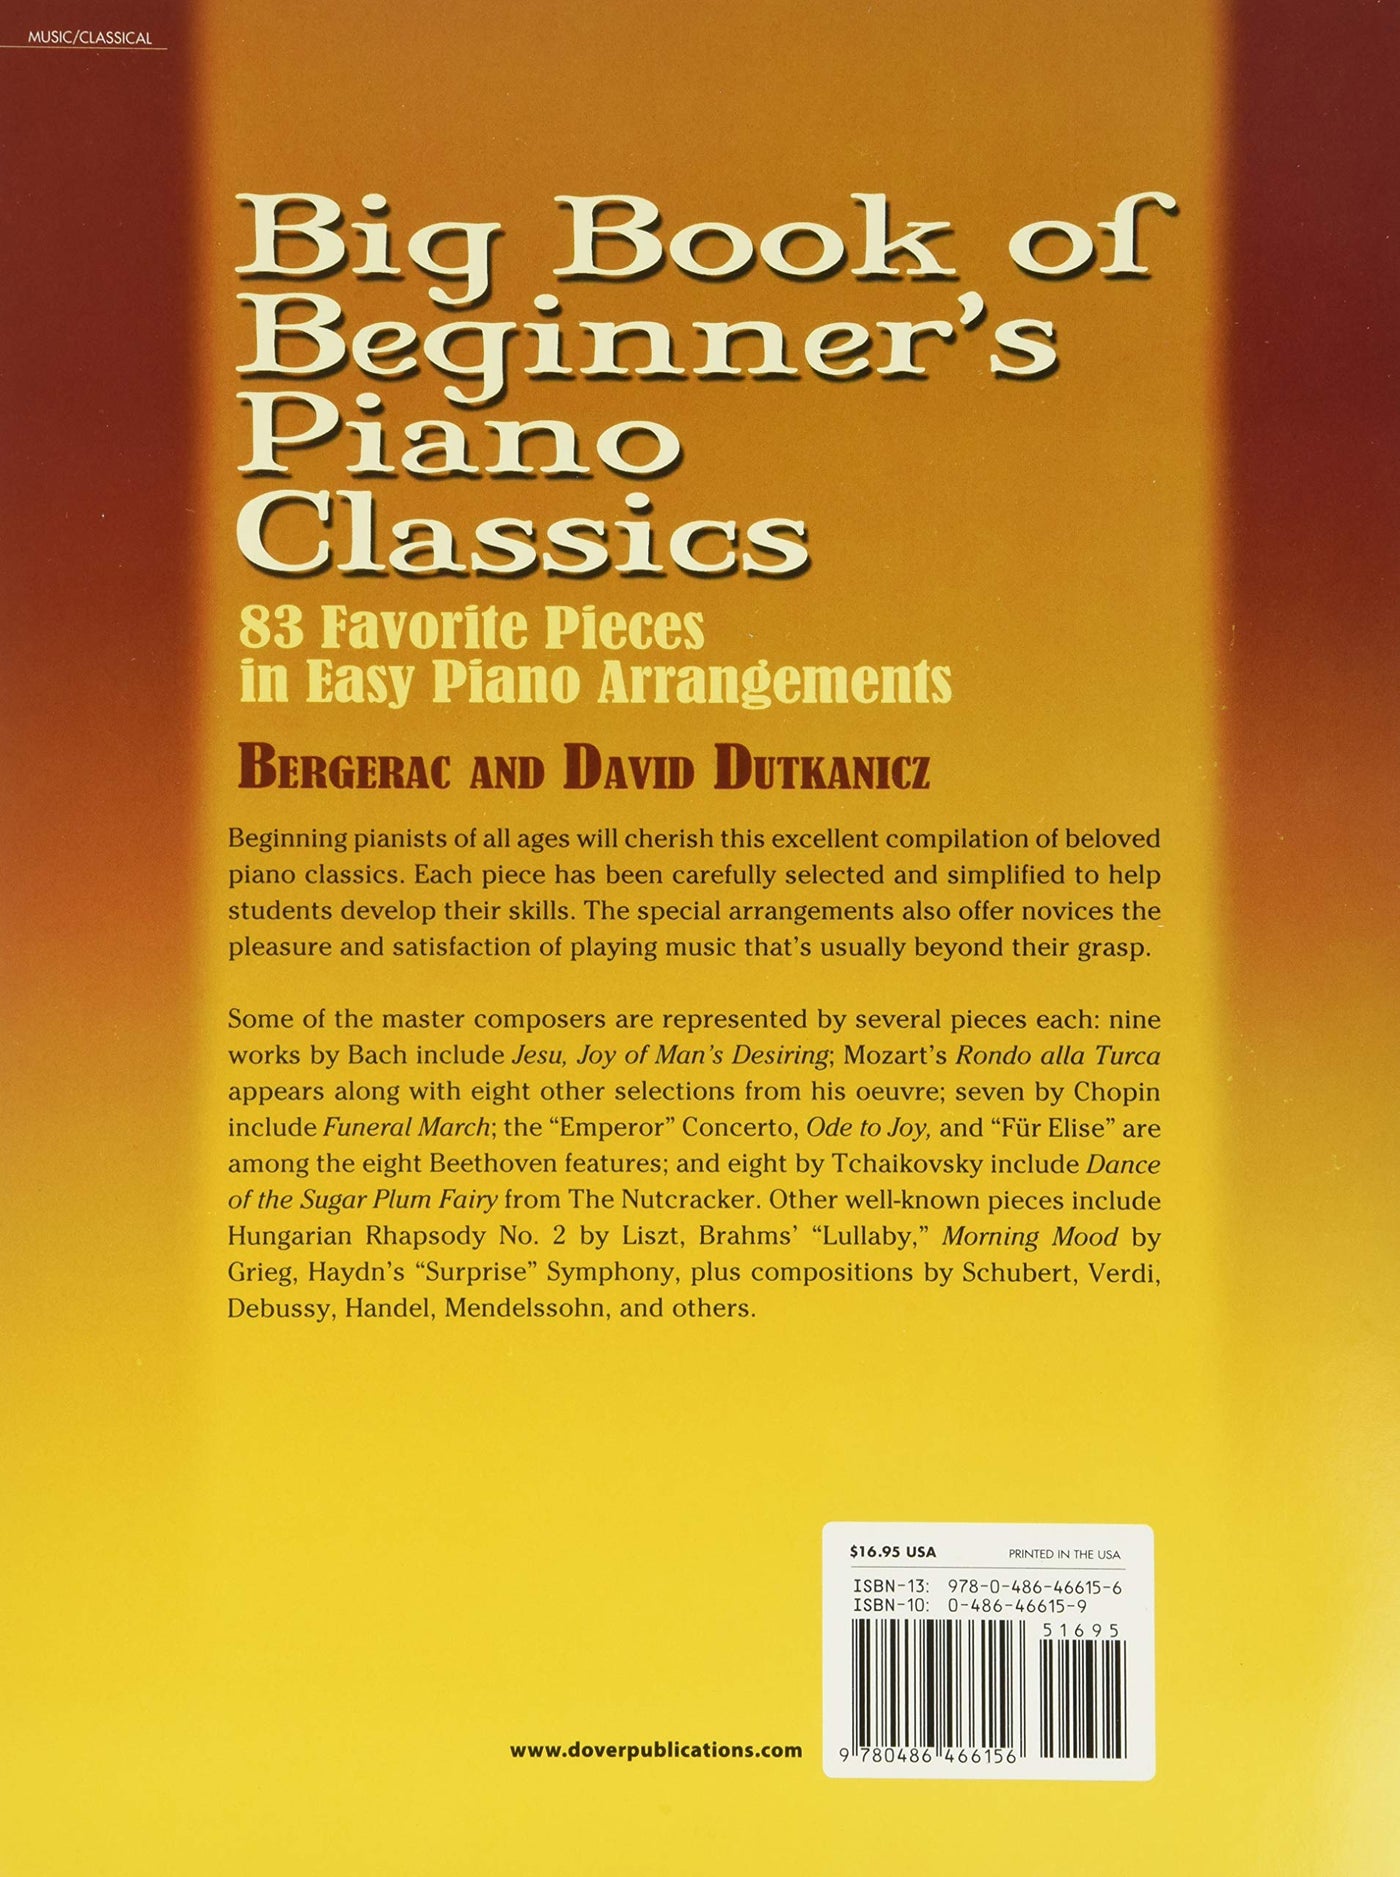 Back cover of Big Book of Beginner's Piano Classics